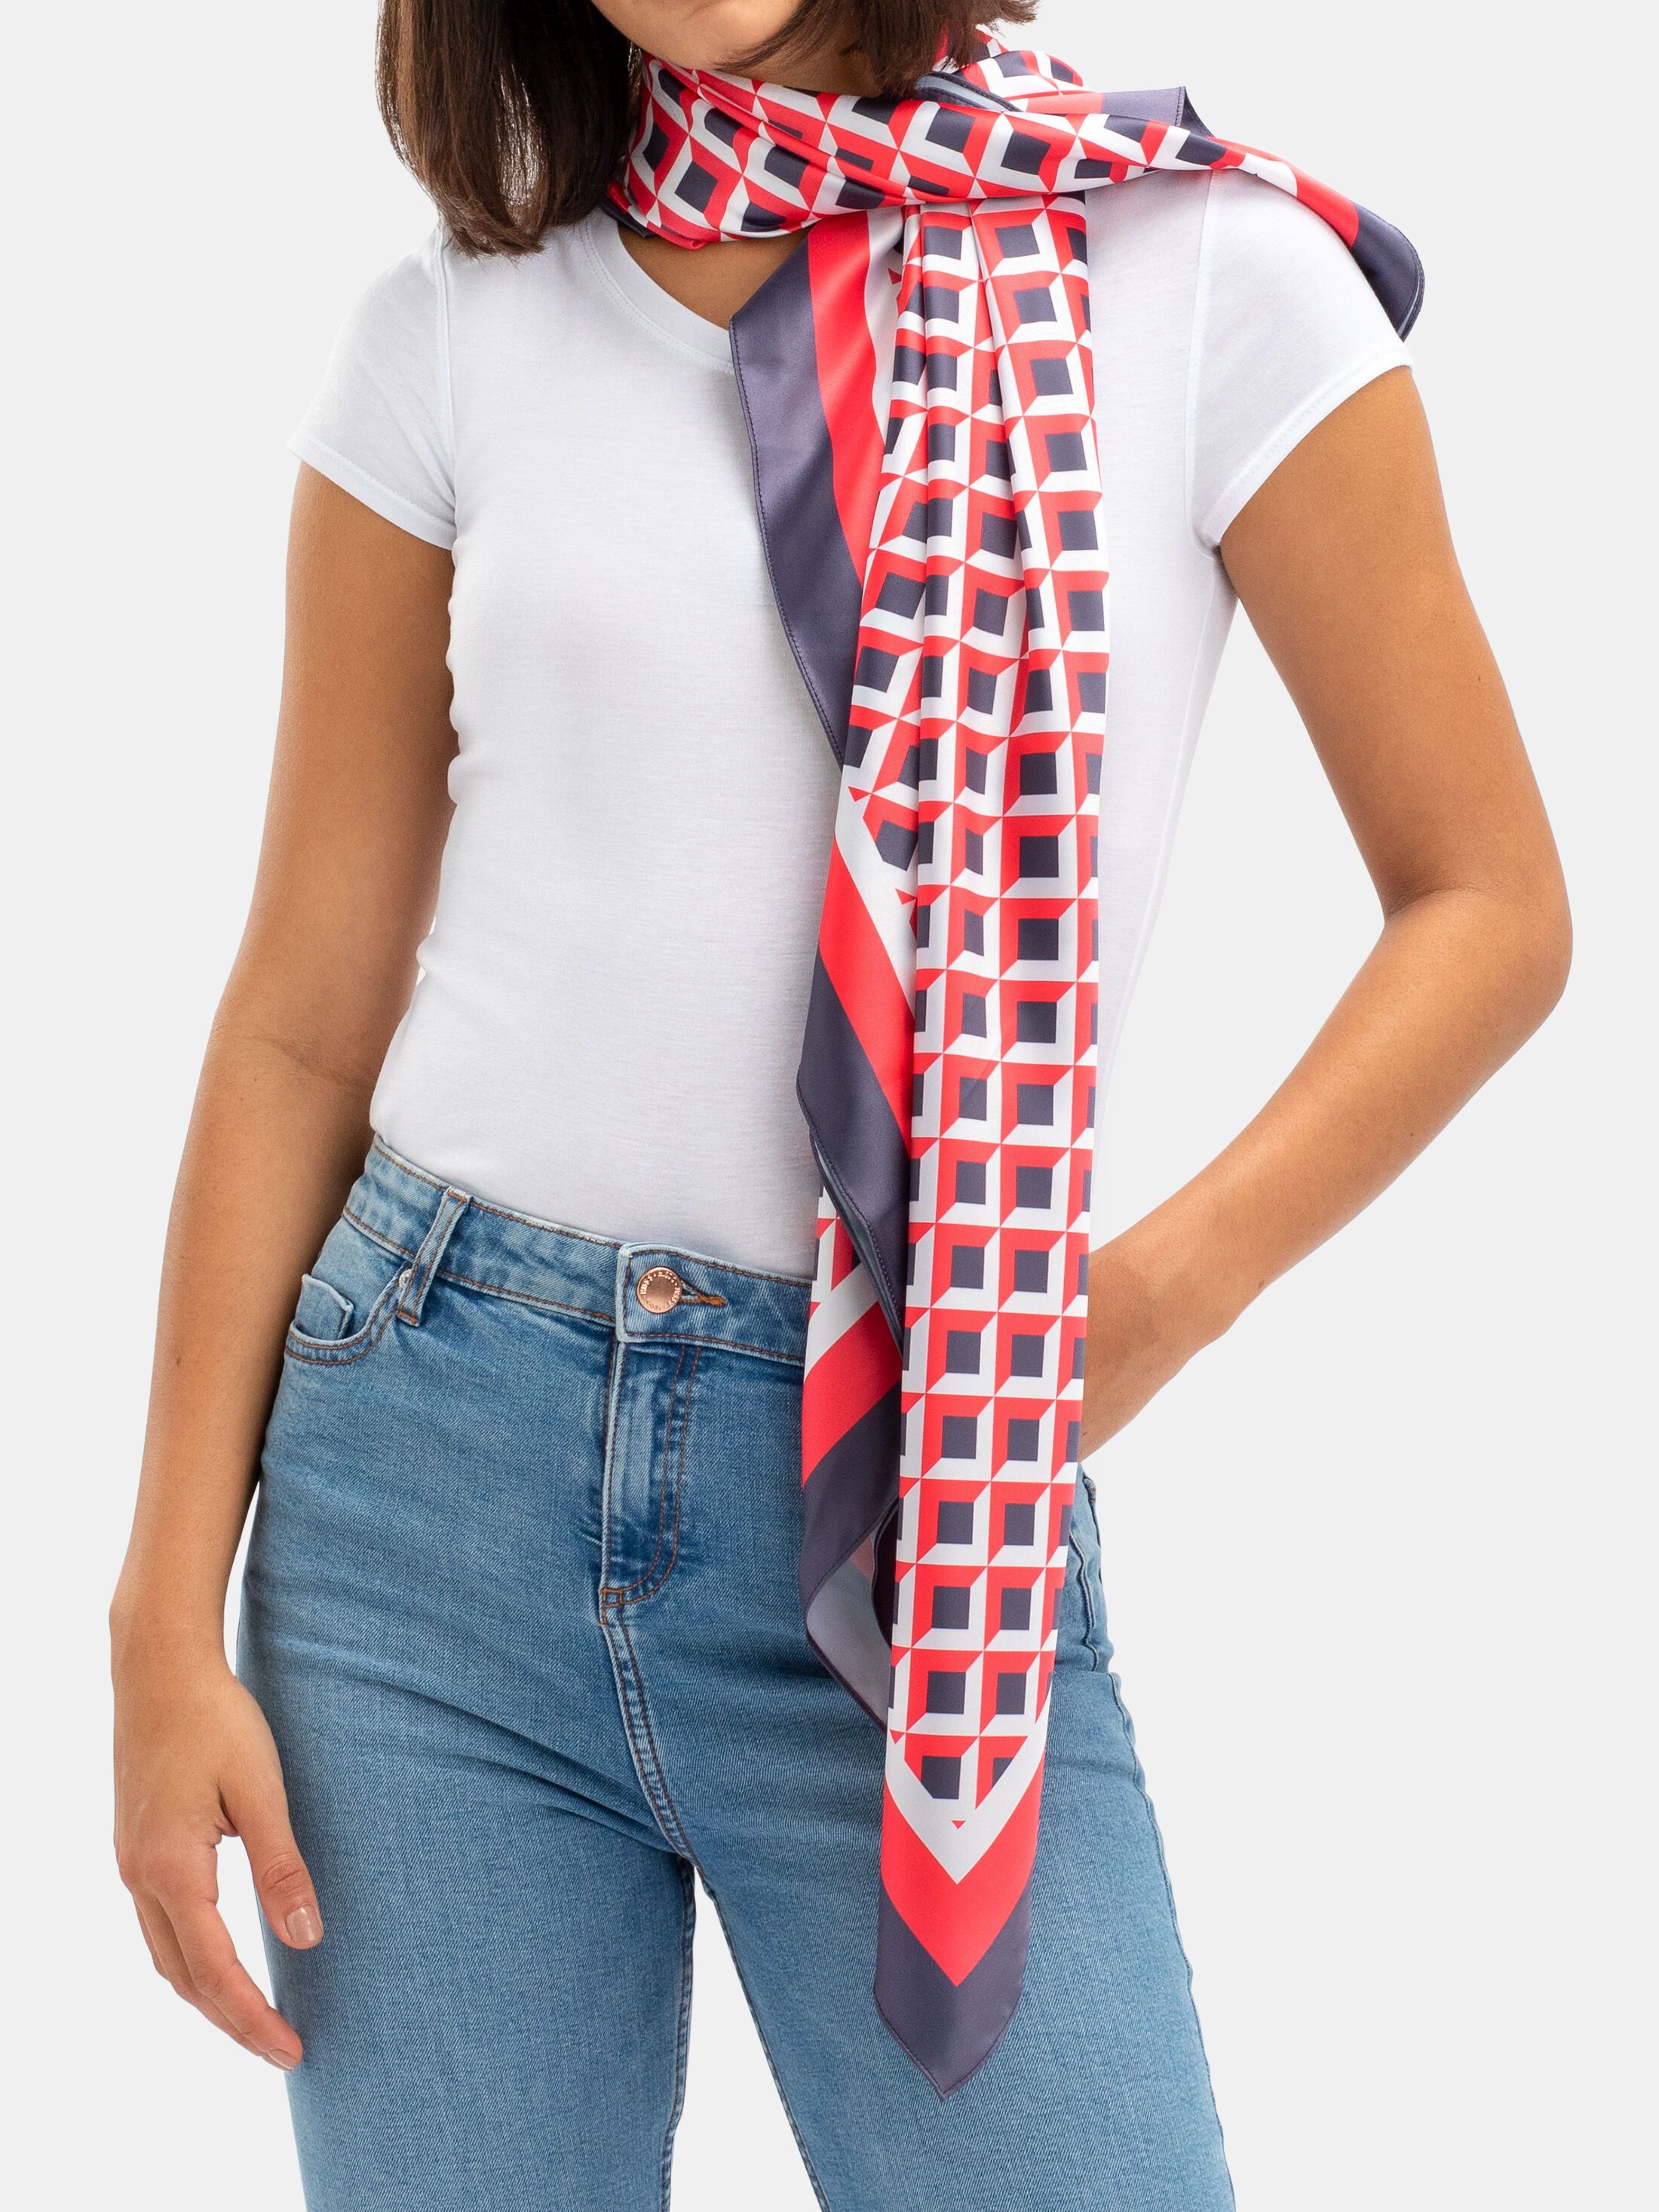 hemming options Printing on silk scarf